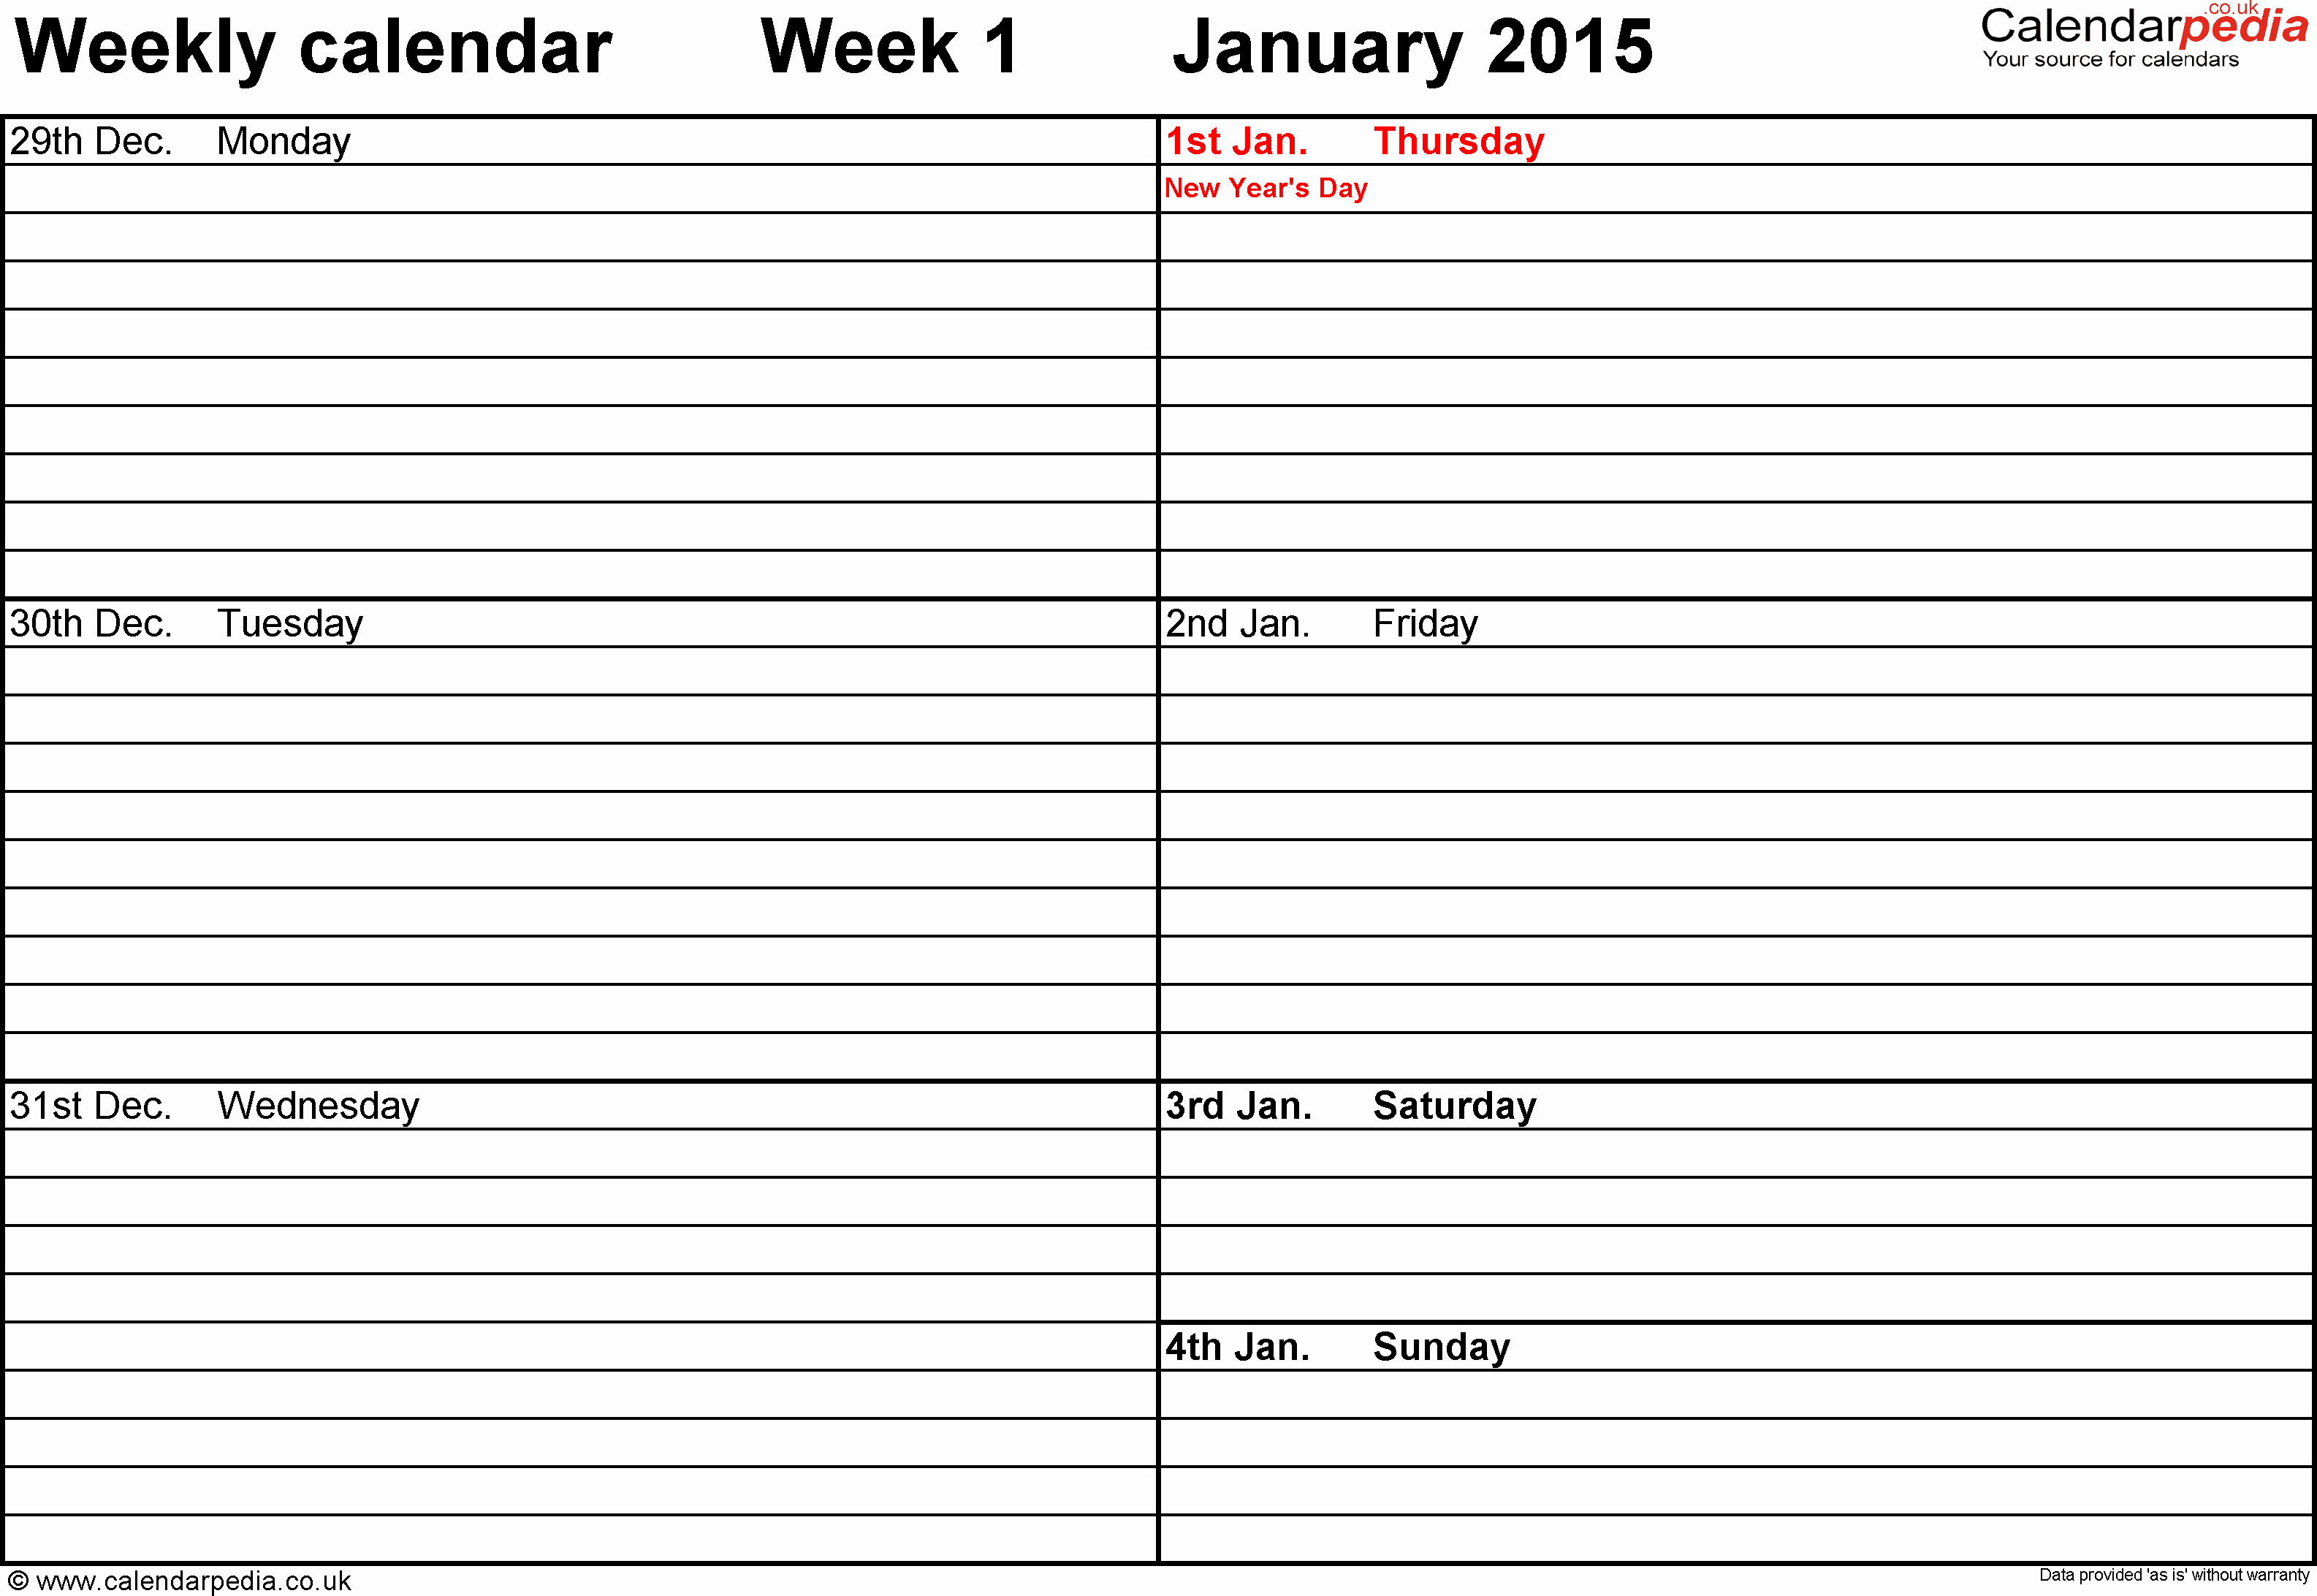 One Week Schedule Template New Weekly Calendar 2015 Uk Free Printable Templates for Word